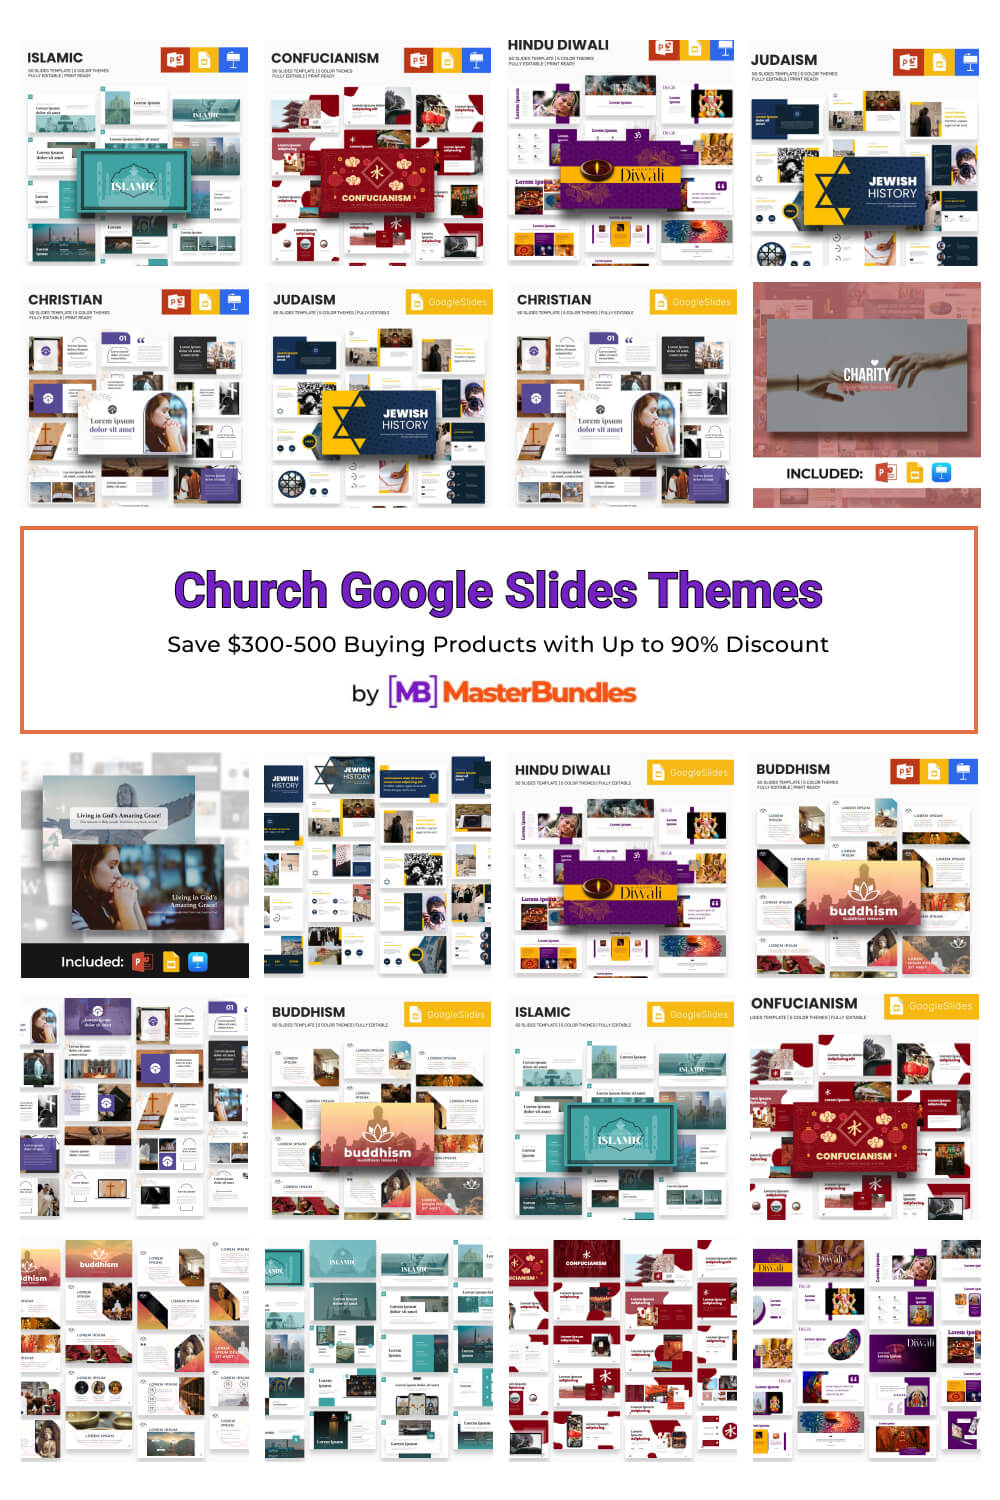 church google slides themes pinterest image.